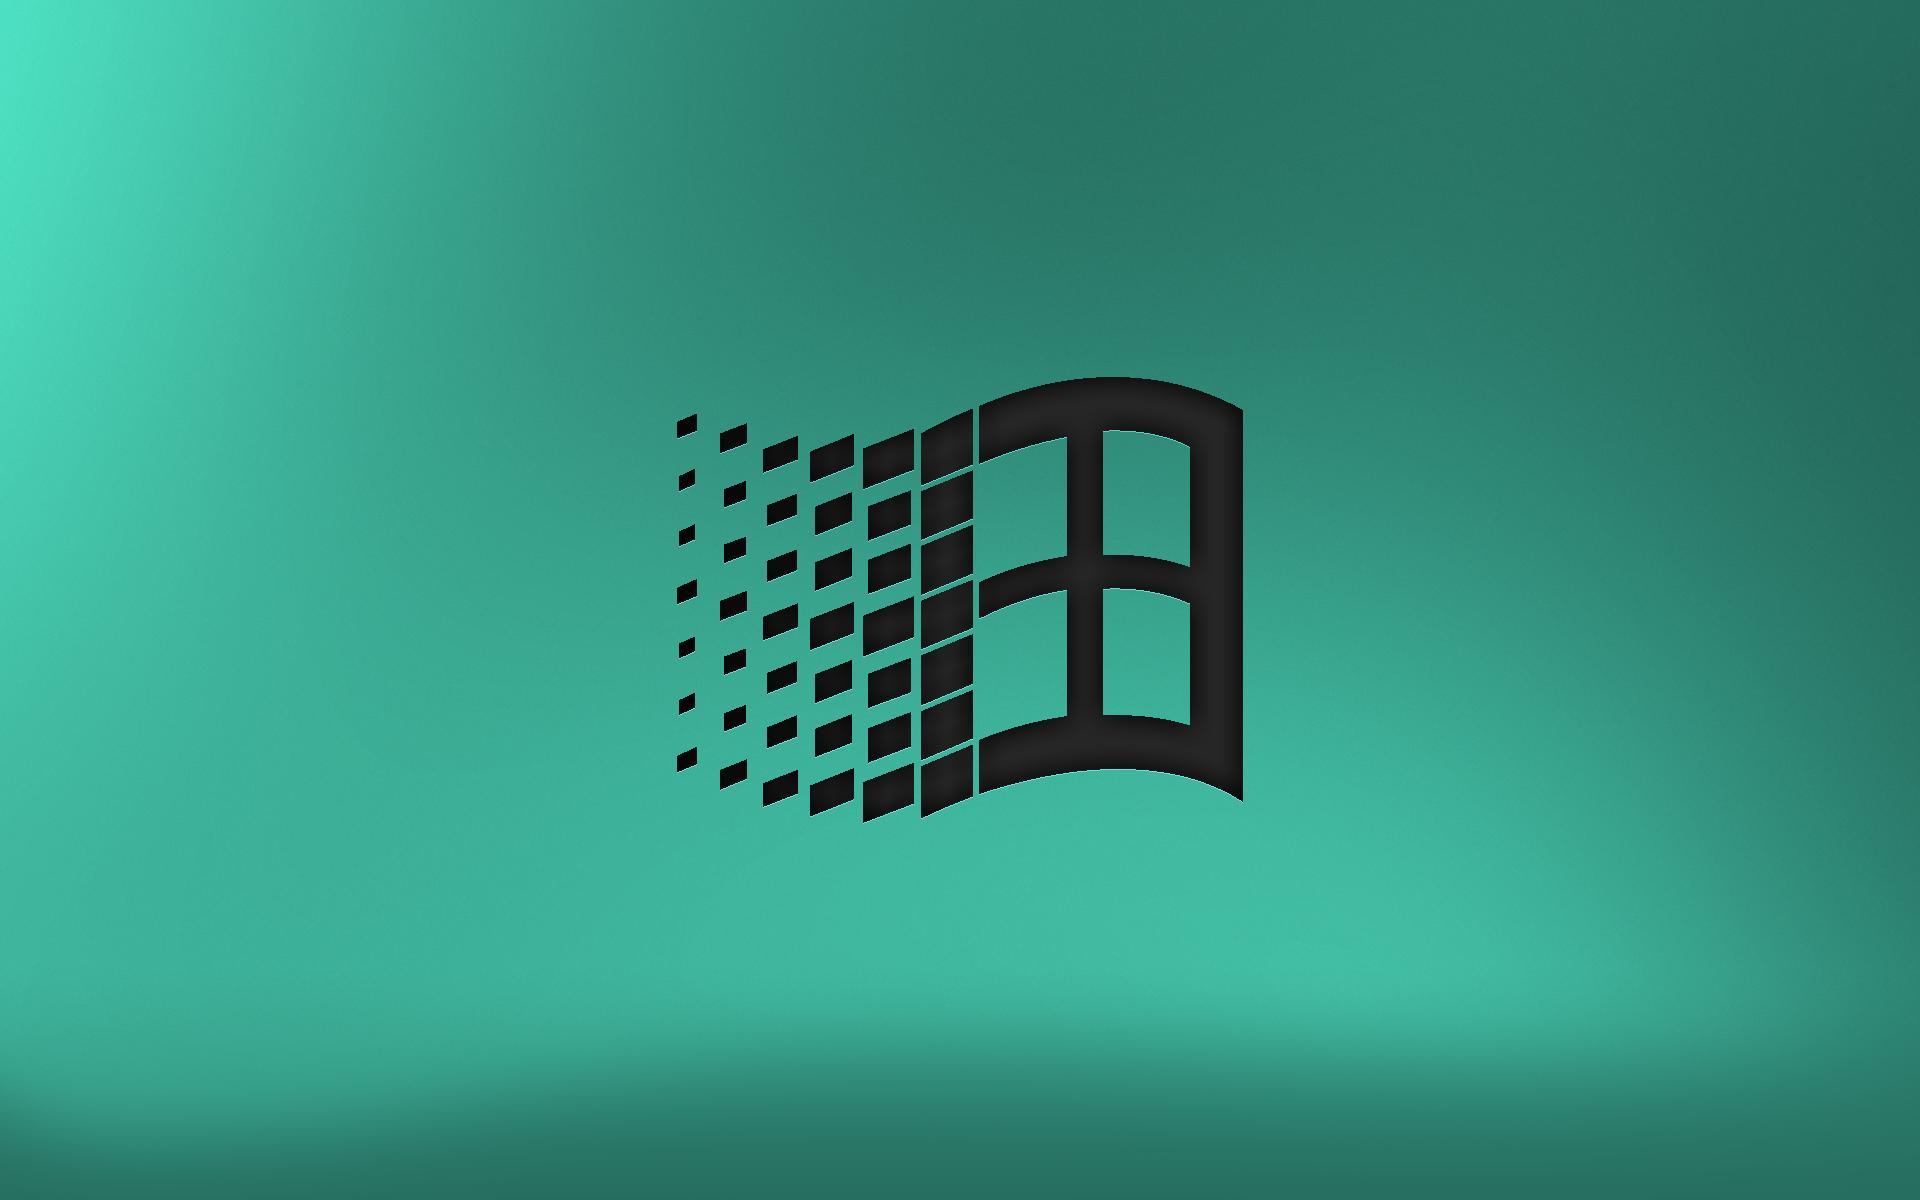 Old Windows Logo - Wallpaper Of Old Microsoft Windows Logo | PaperPull